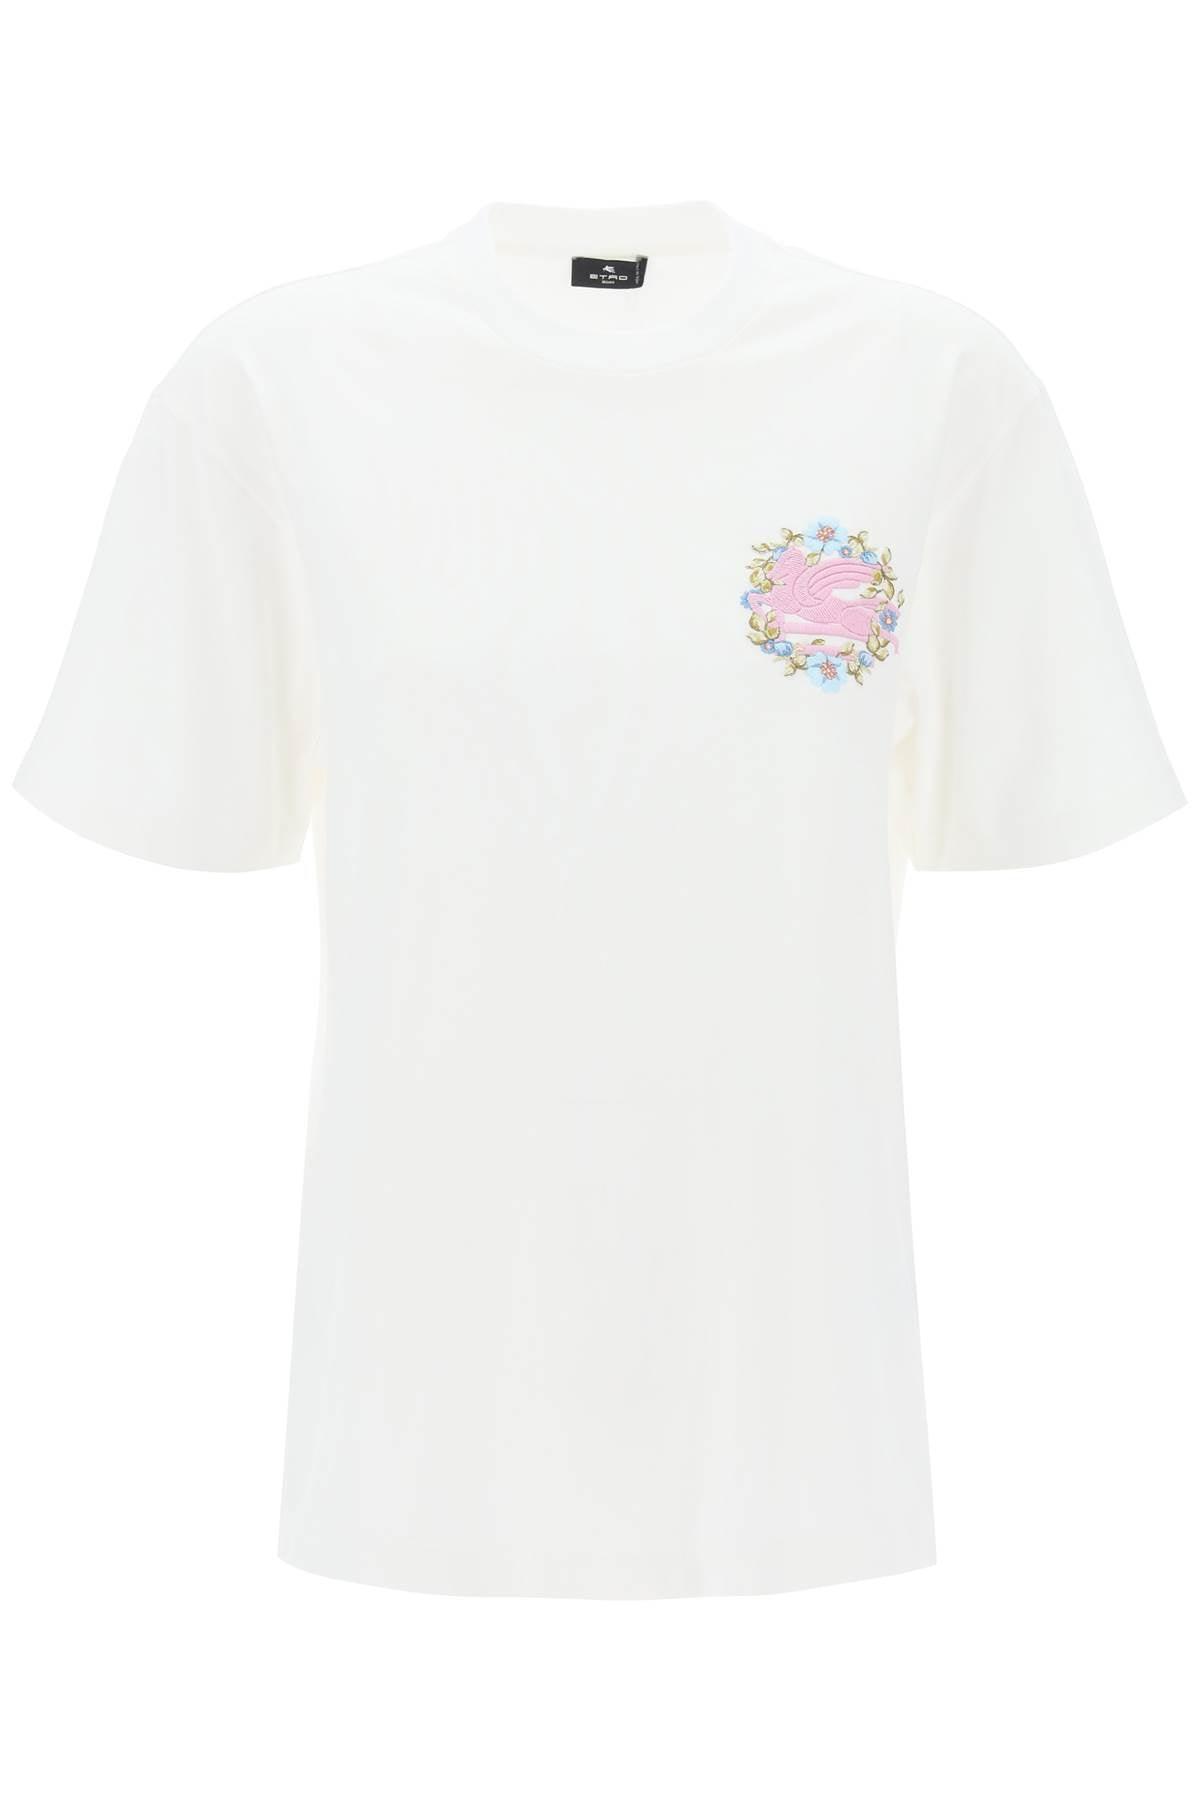 Etro Cotton T-Shirt with Embroidered Pegasus - JOHN JULIA